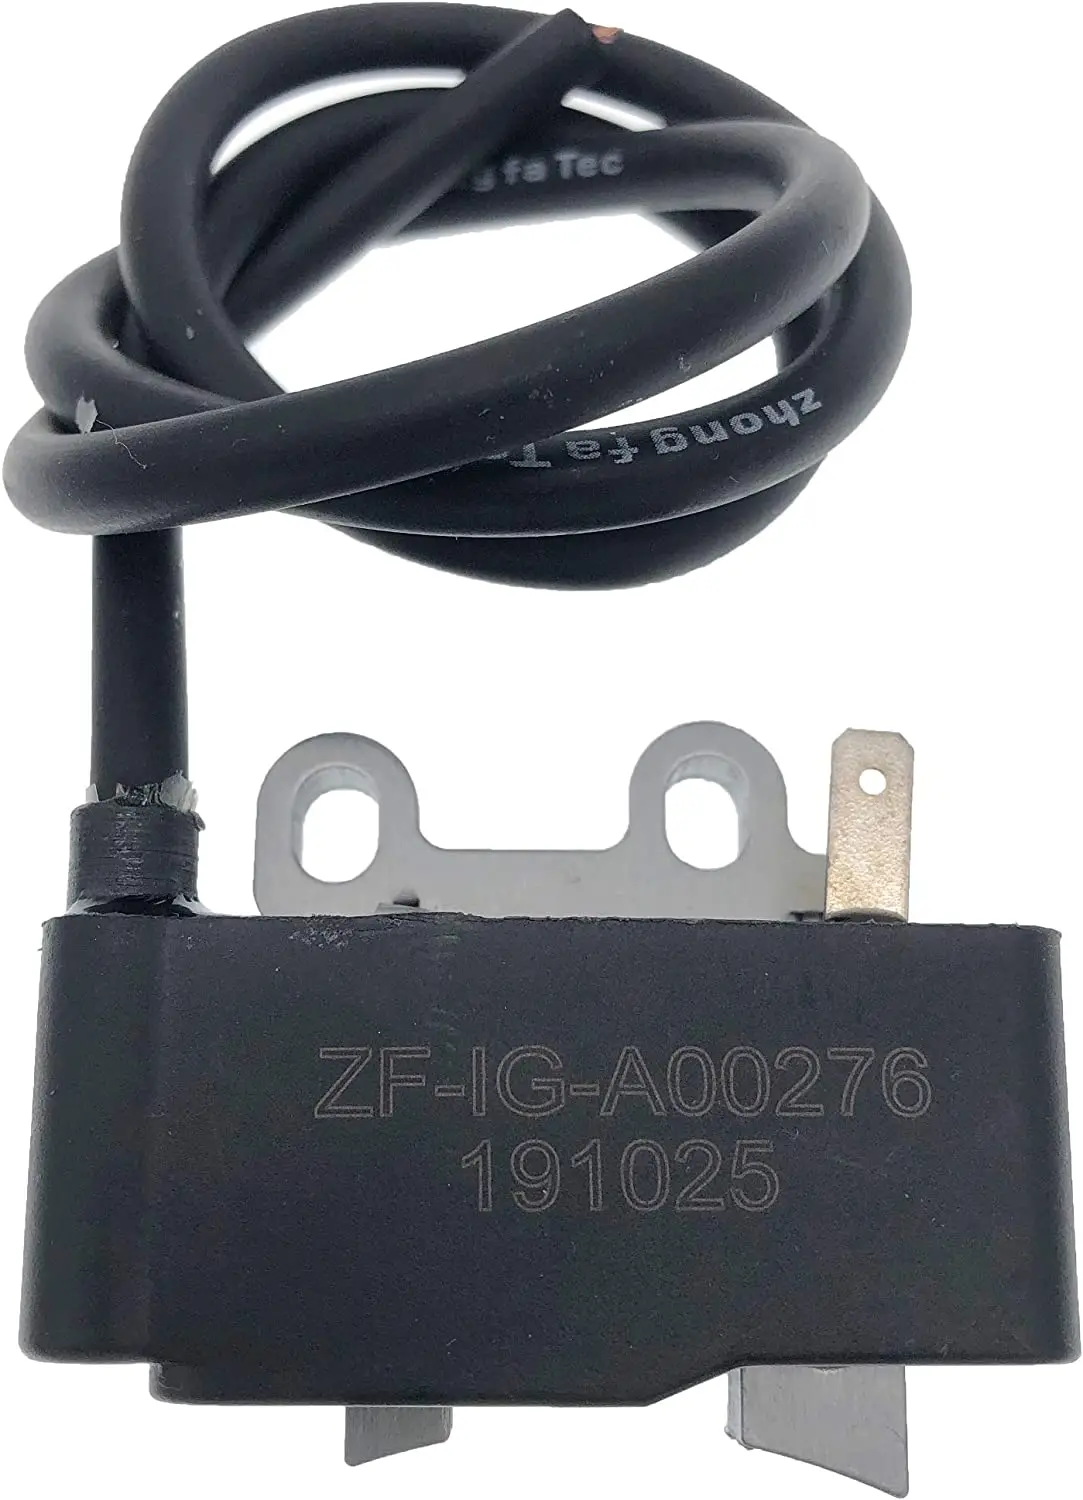 A411000420 C11214 Ignition Coil Module for Echo Shindaiwa Kioritz Mantis Backpack Blower PB-500 PB-500H PB-500T ZF-IG-A00276